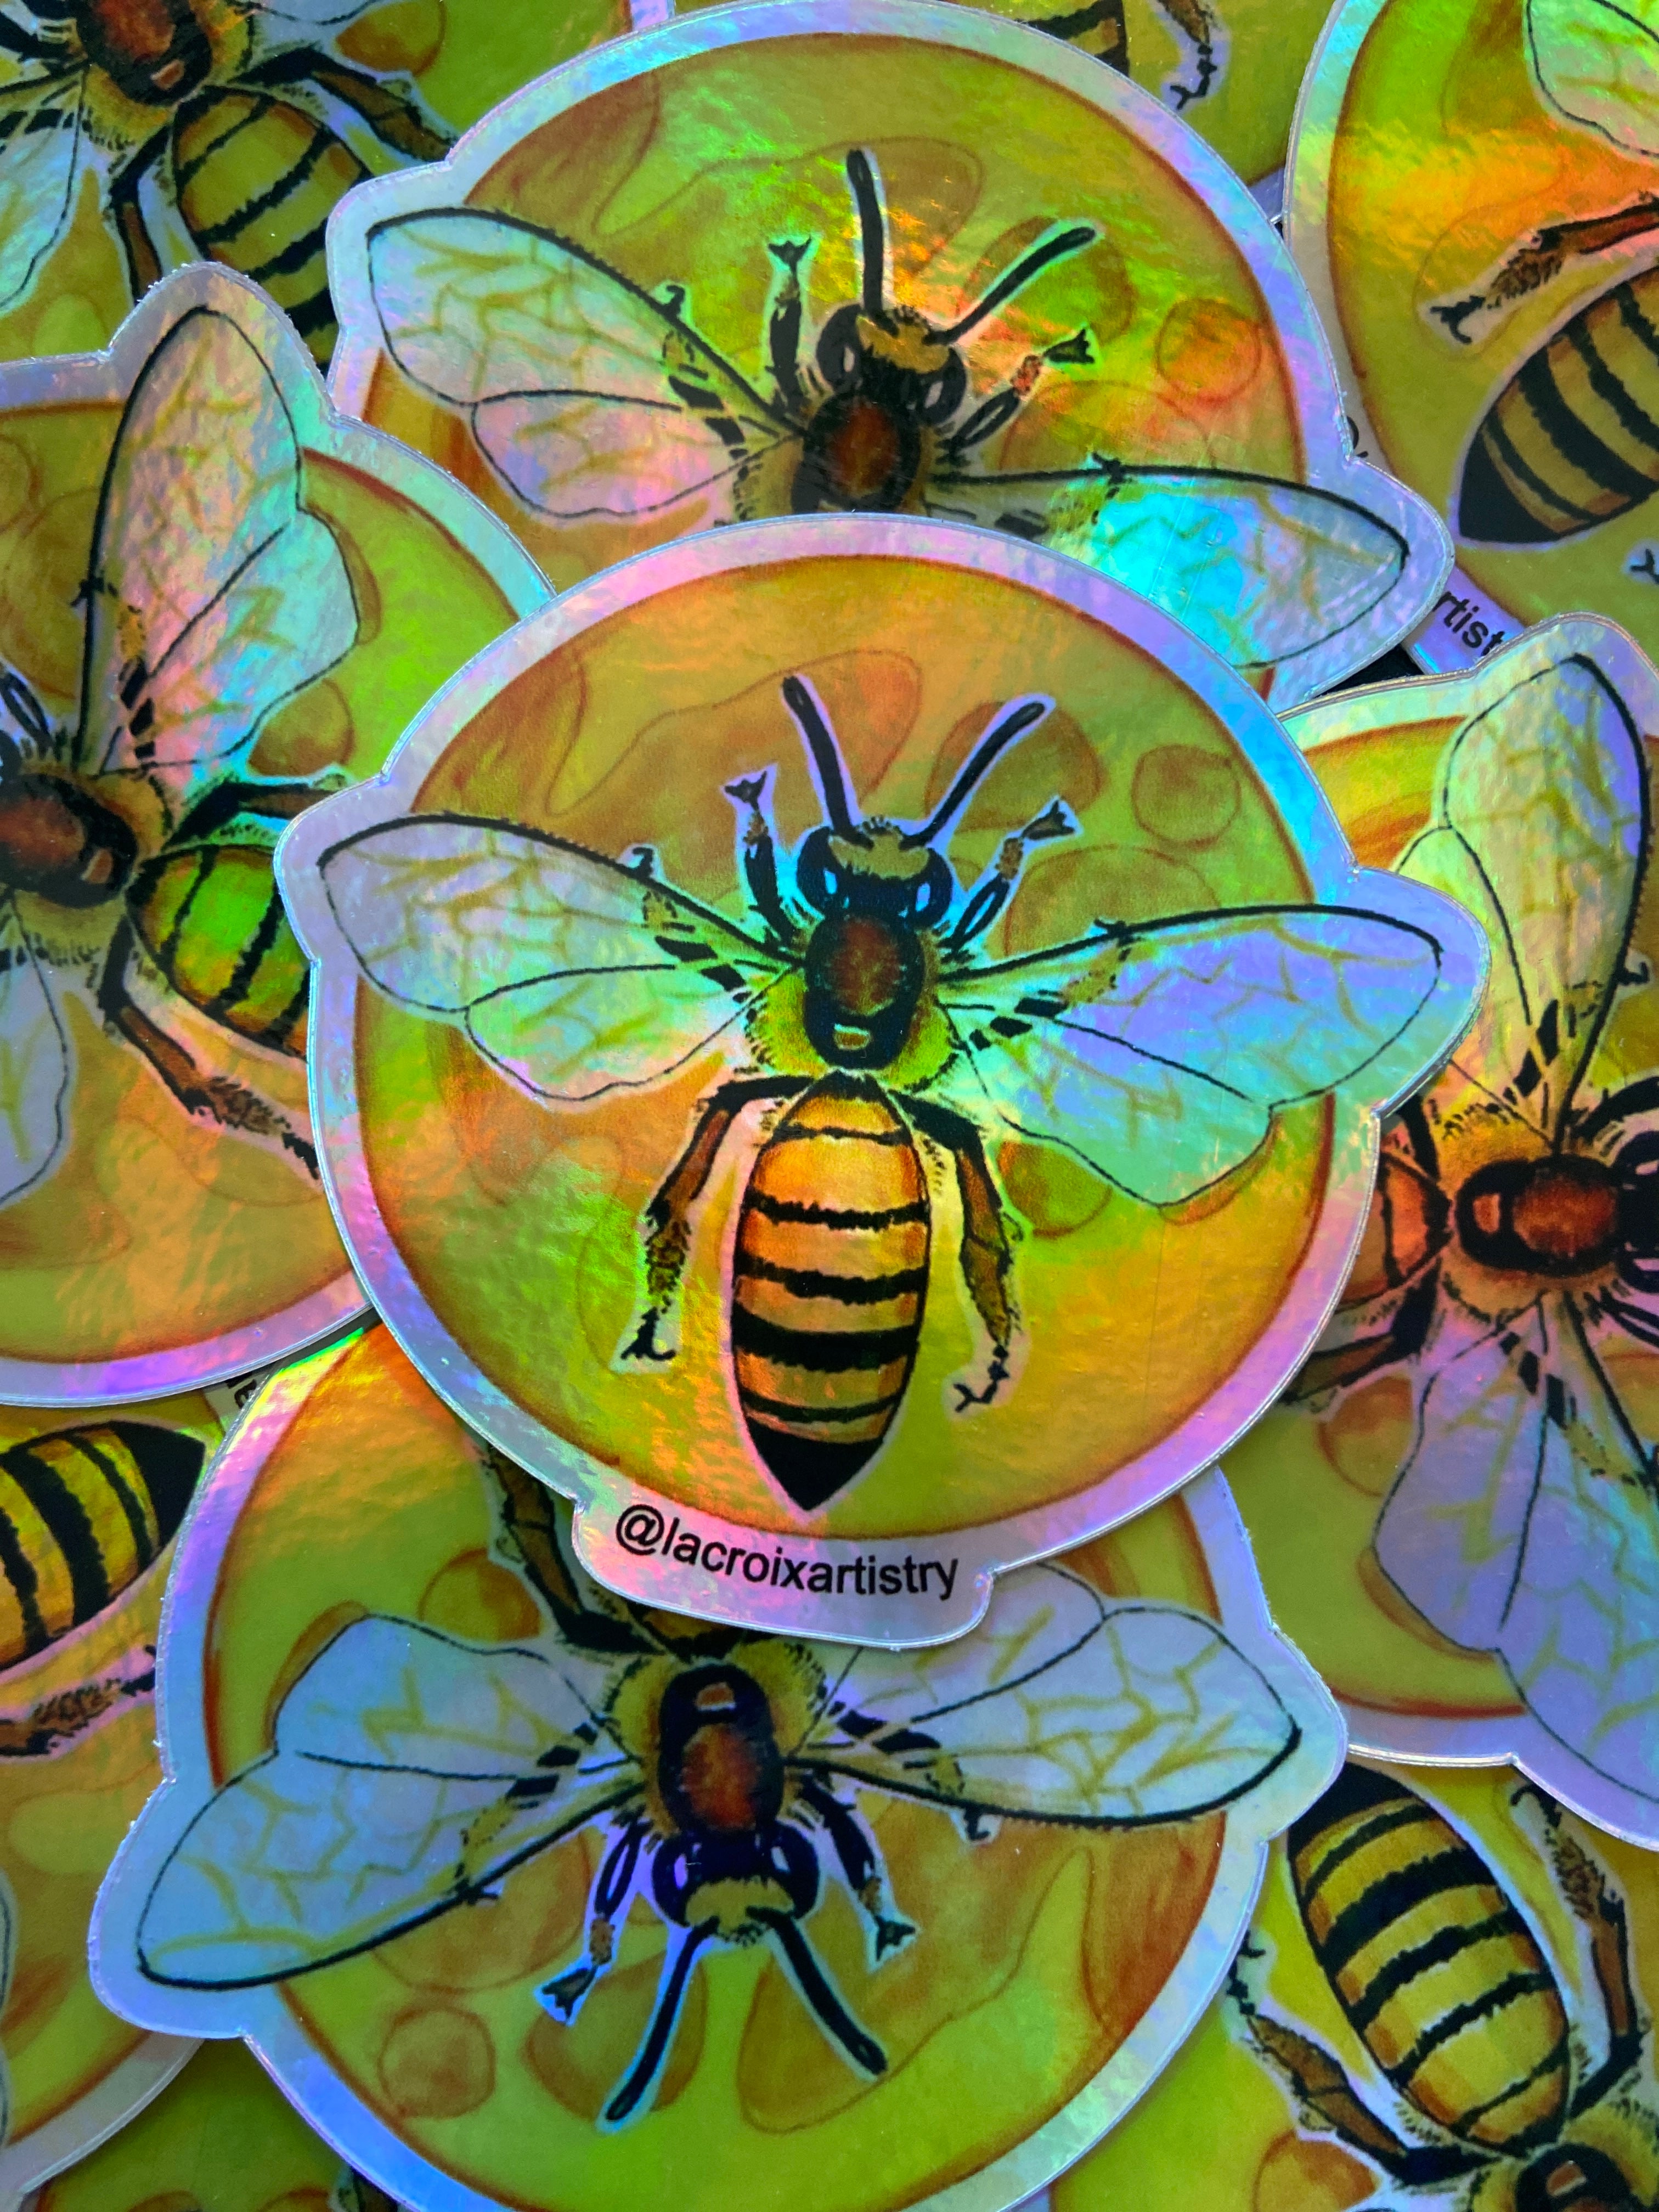 Moon Bee 3” holographic vinyl LaCroix Artistry Sticker